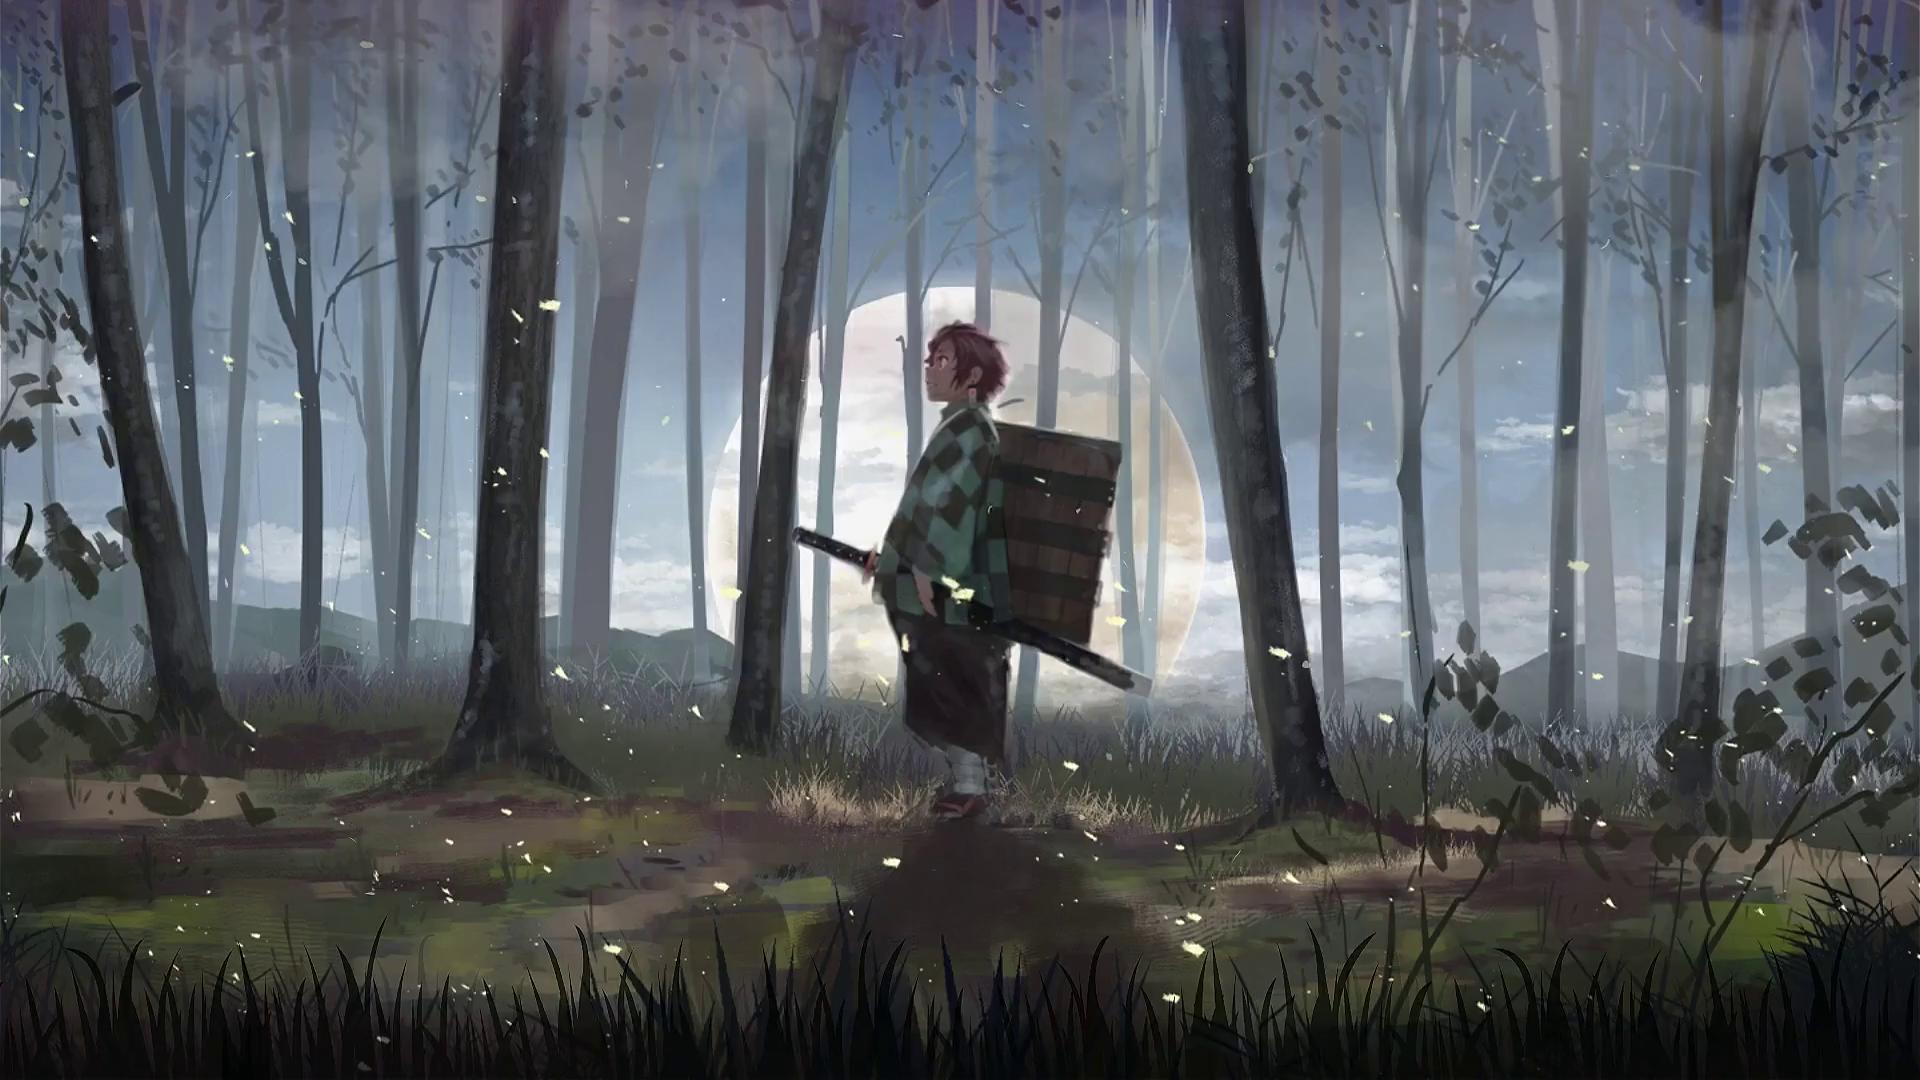 Anime Forest 4k Ultra HD Wallpaper